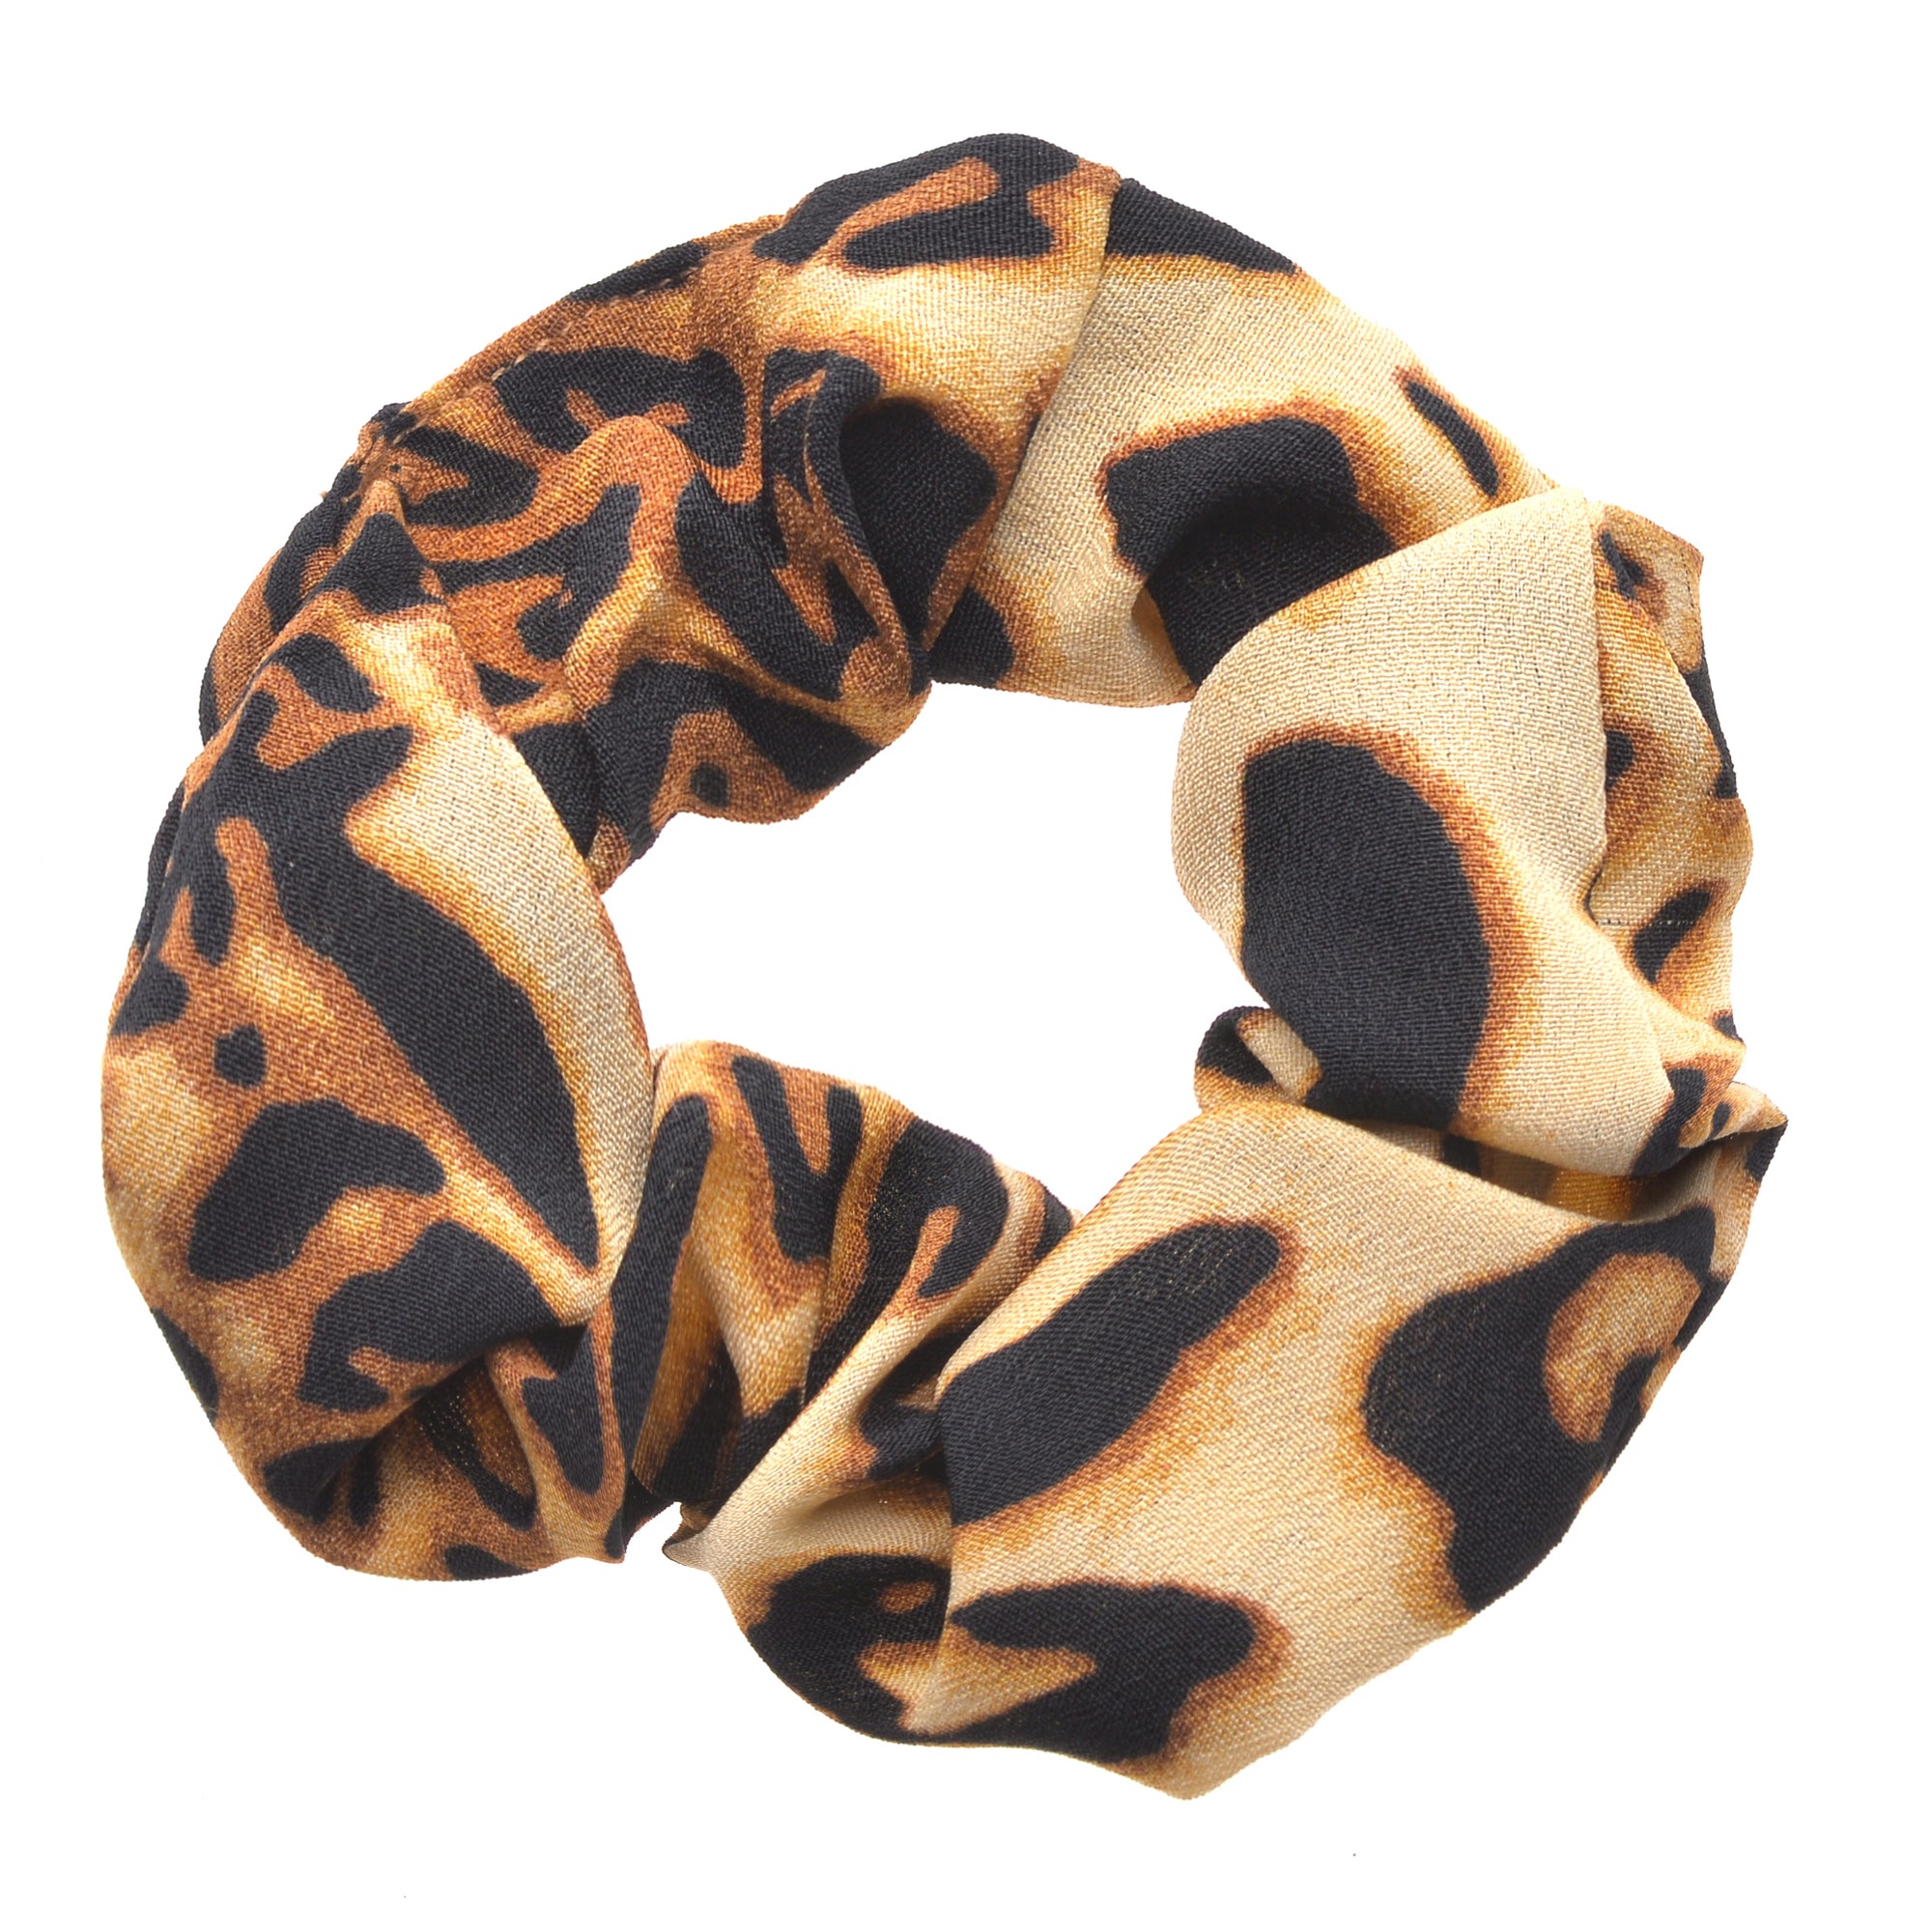 Beige Animal Print Scrunchie, Cheetah Scrunchie, Leopard Print Scrunchie,  Black Cream Pink, Hair Tie Scrunchy, Cotton Hair Accessory -  Canada